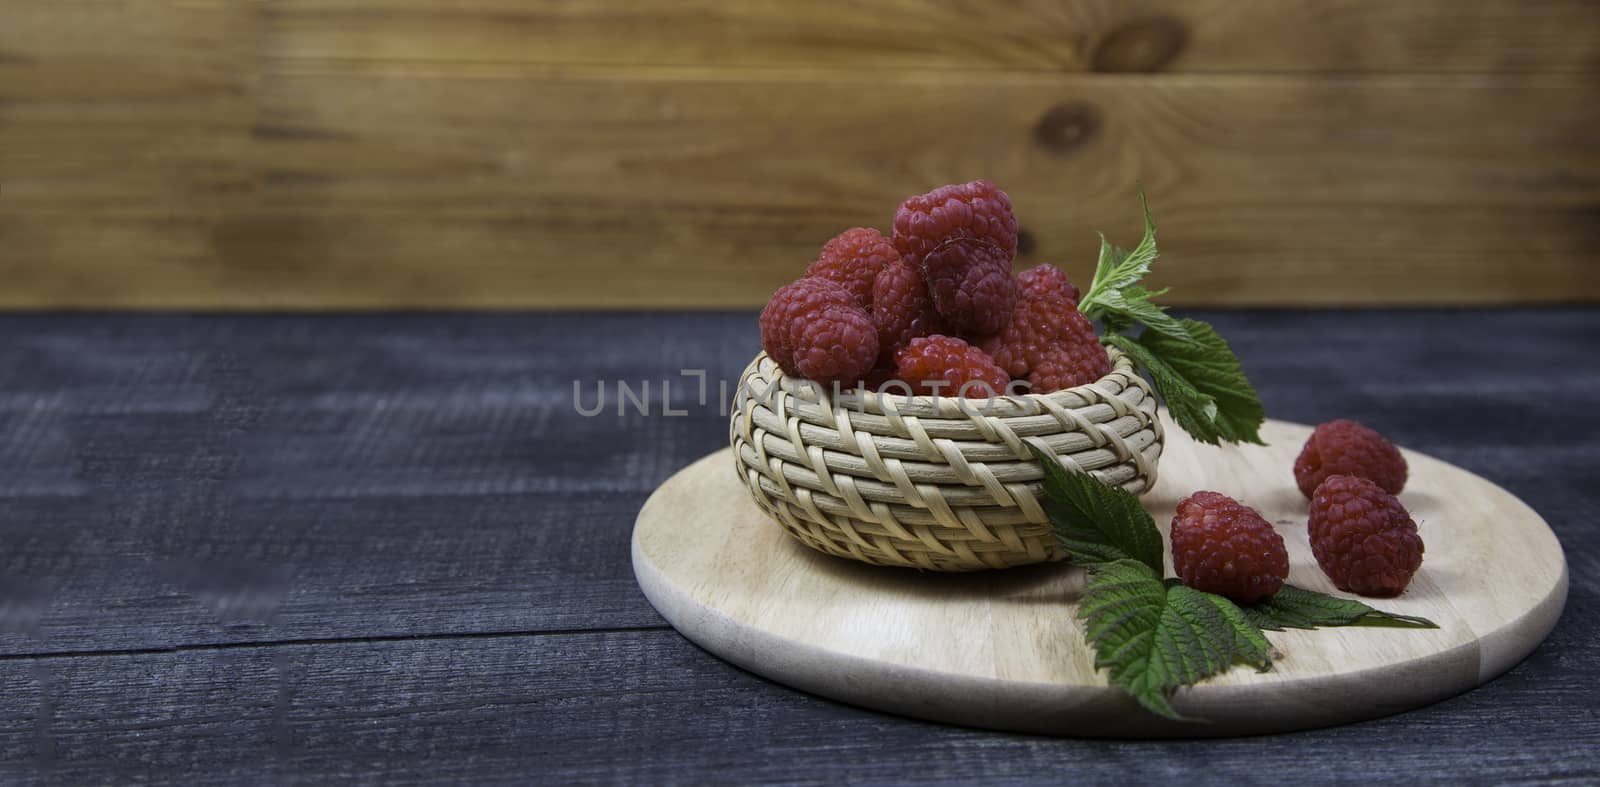 Fresh raspberry in a wicker basket on a wooden background by galinasharapova